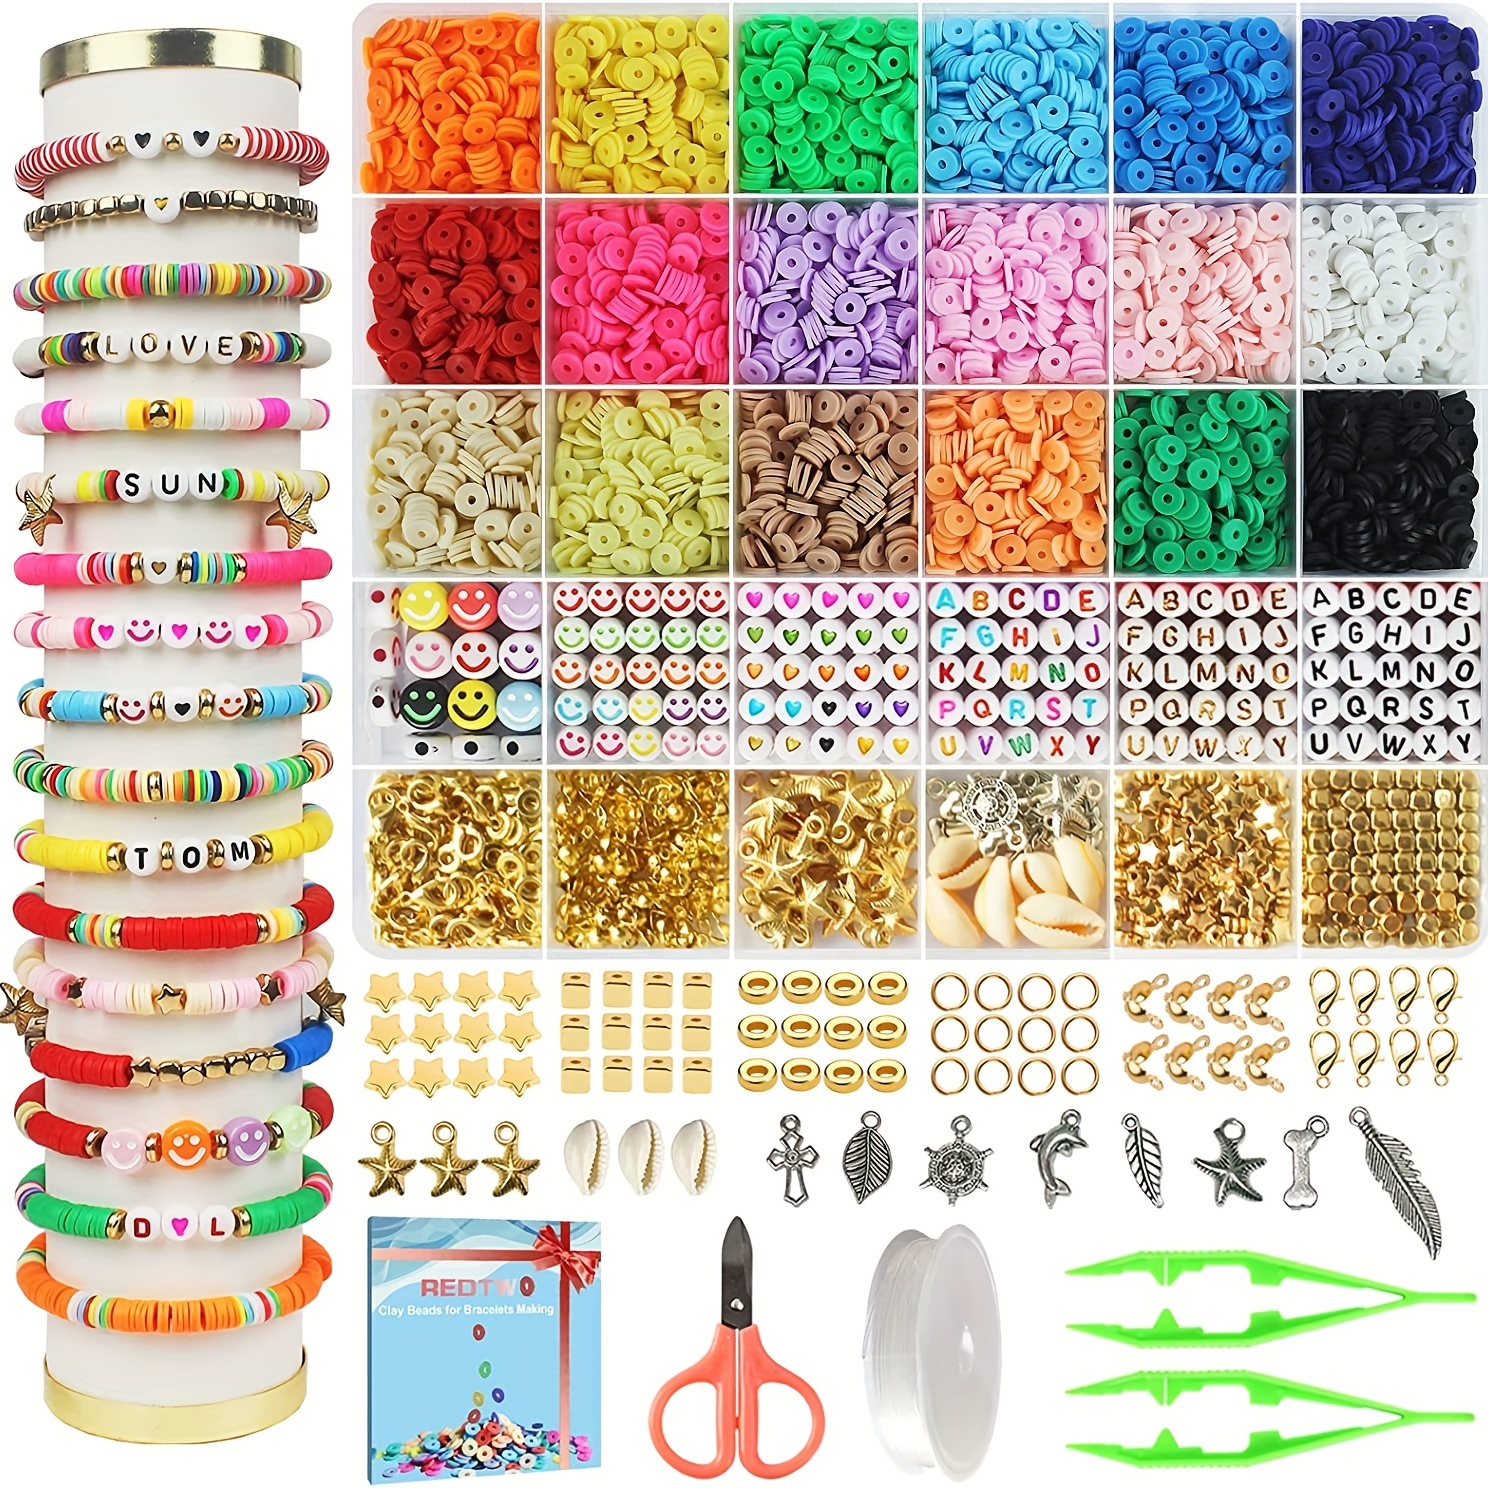 Bracelet Making Kit - 6800 PCS Beads Bracelet Kit Arts and Crafts